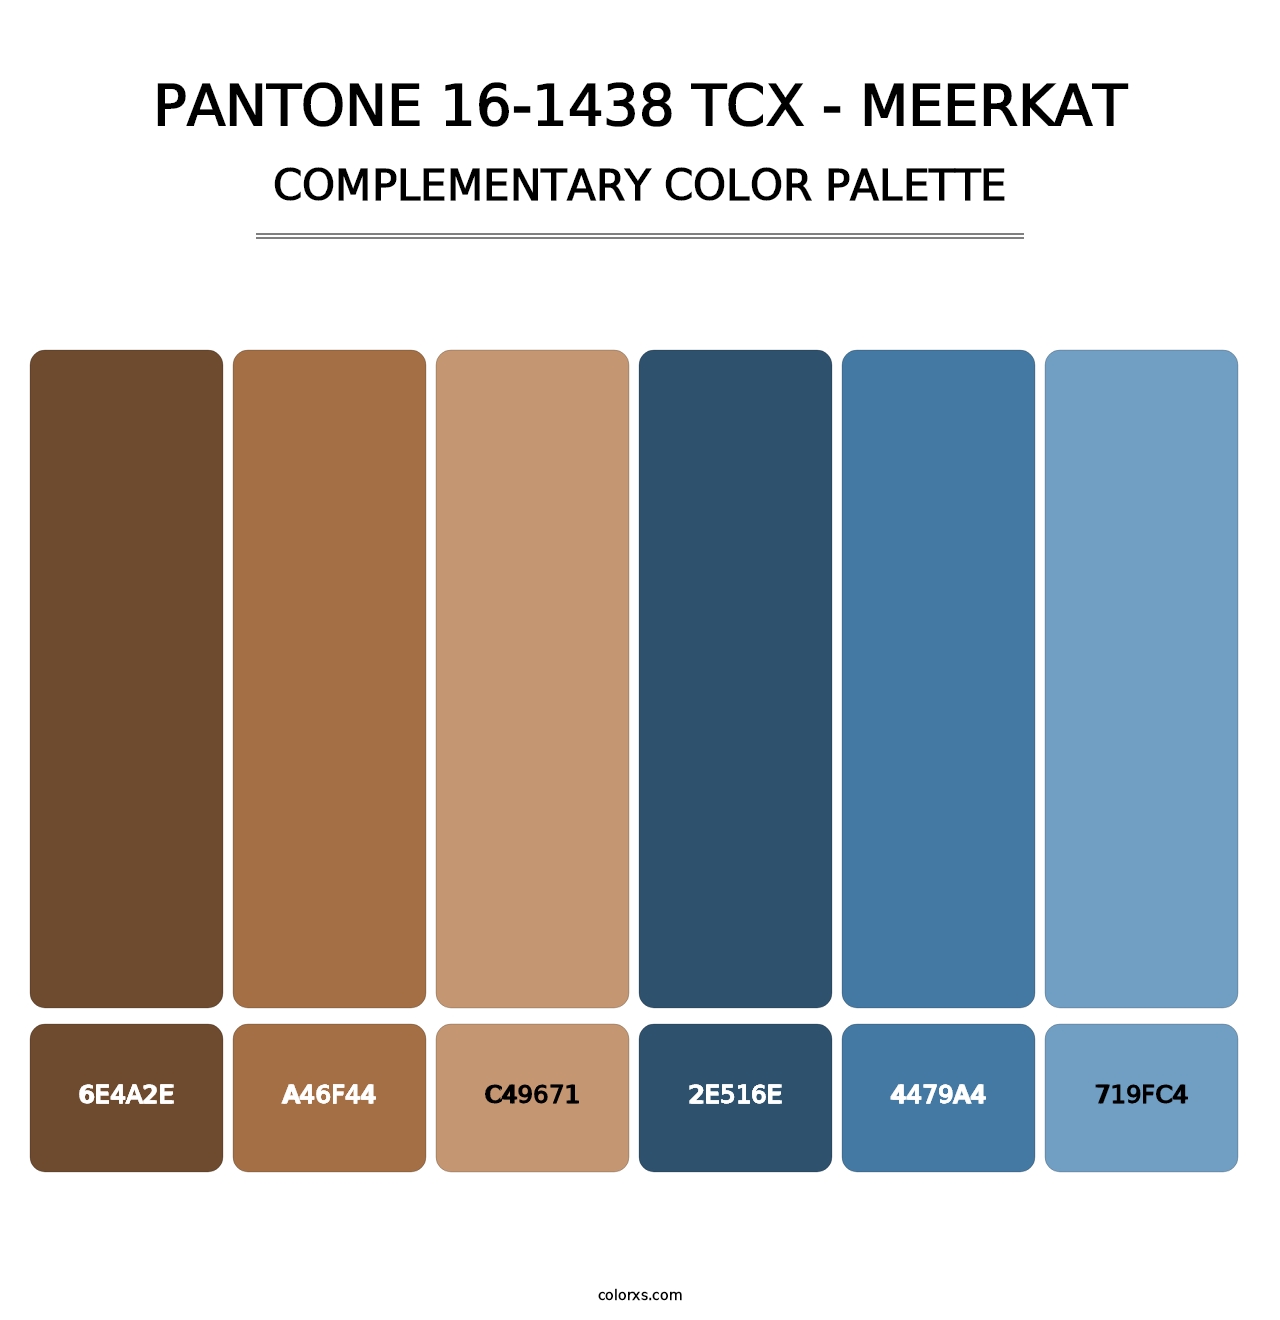 PANTONE 16-1438 TCX - Meerkat - Complementary Color Palette